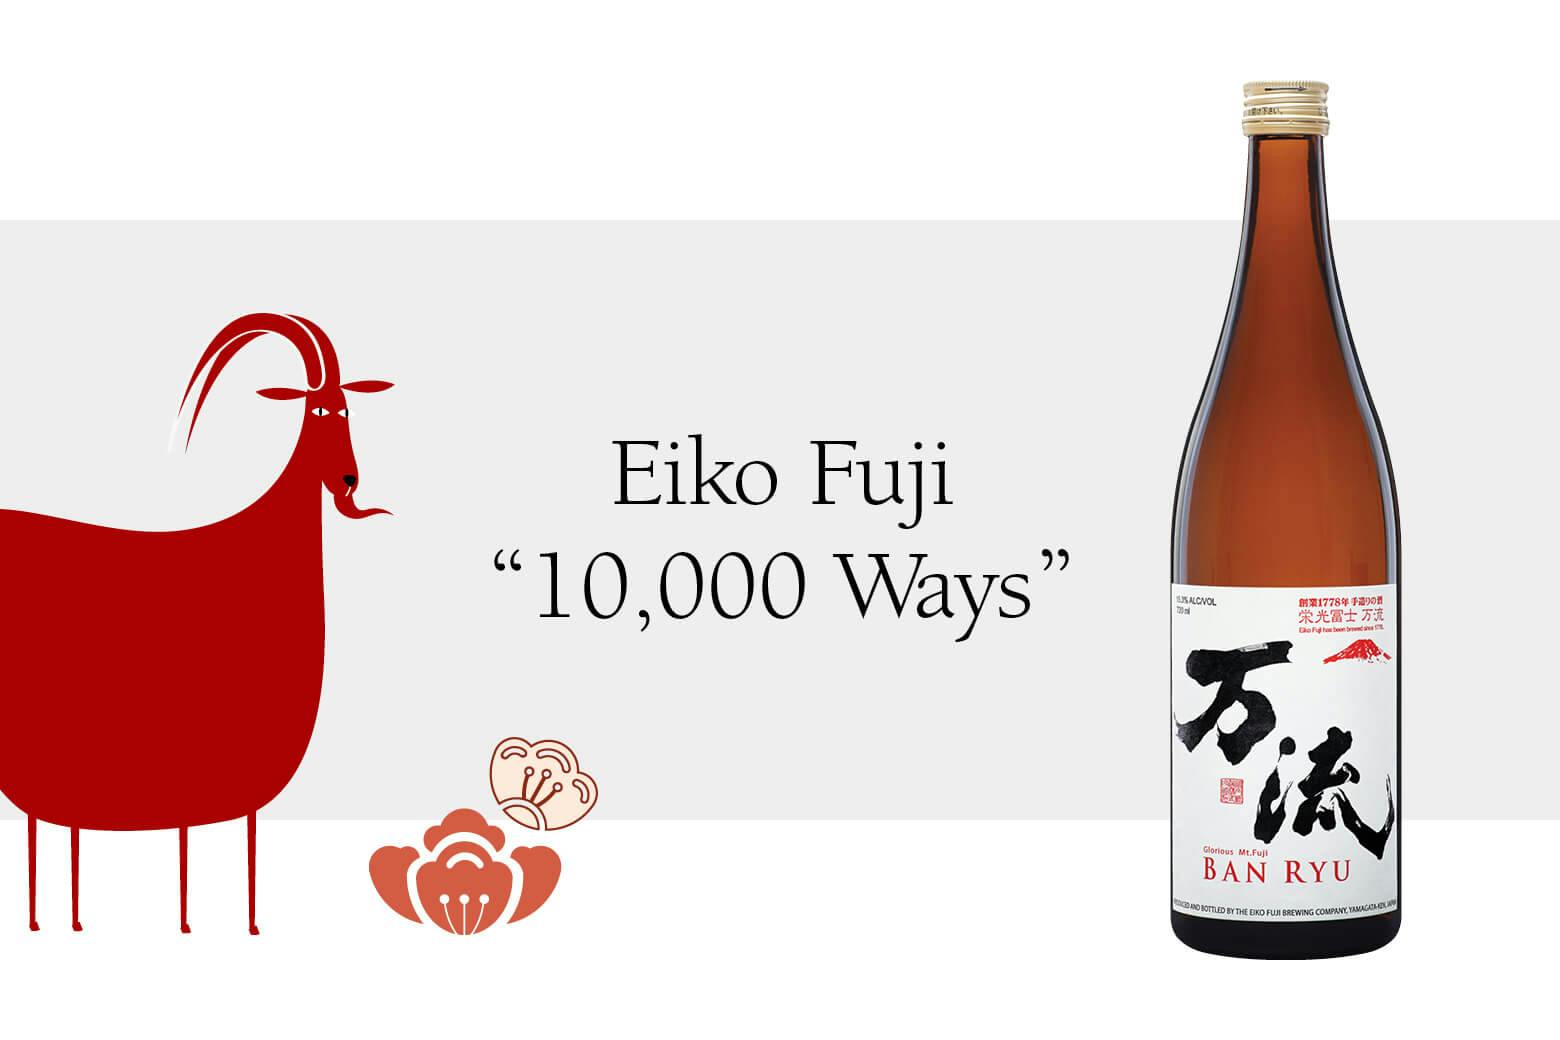 Eiko Fuji “10,000 Ways” with Chinese zodiac Sheep